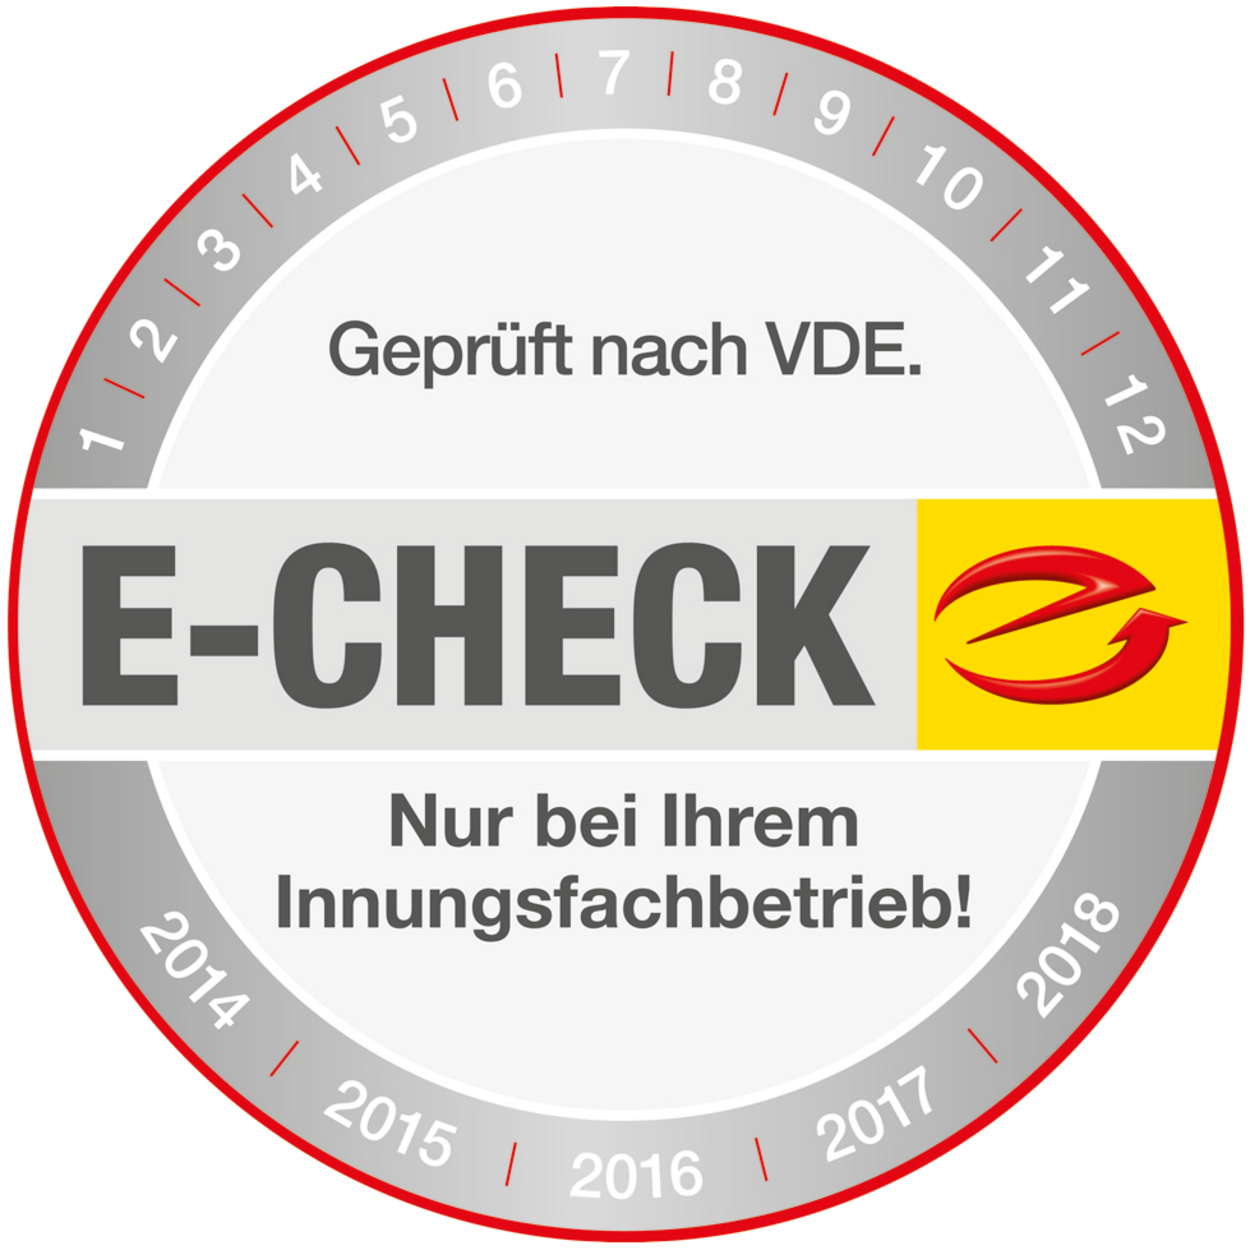 Der E-Check bei Martin Oberbauer in Tegernsee